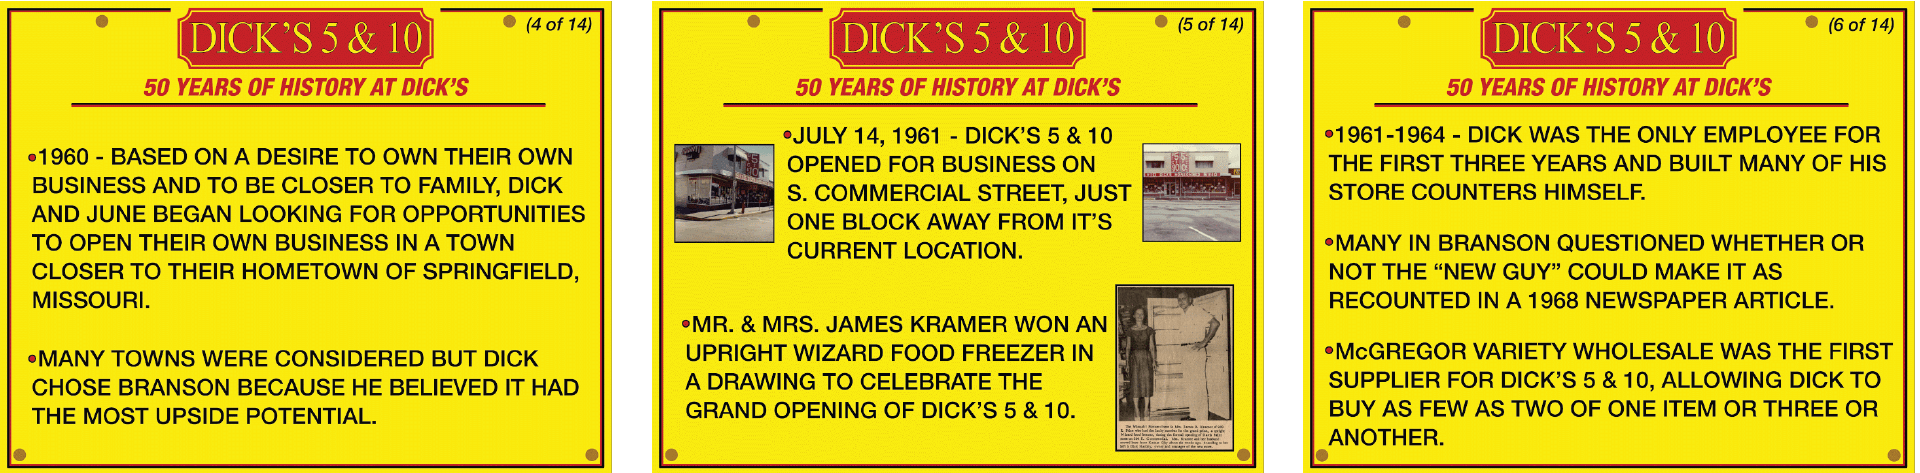 dicks 5 & 10 history 2